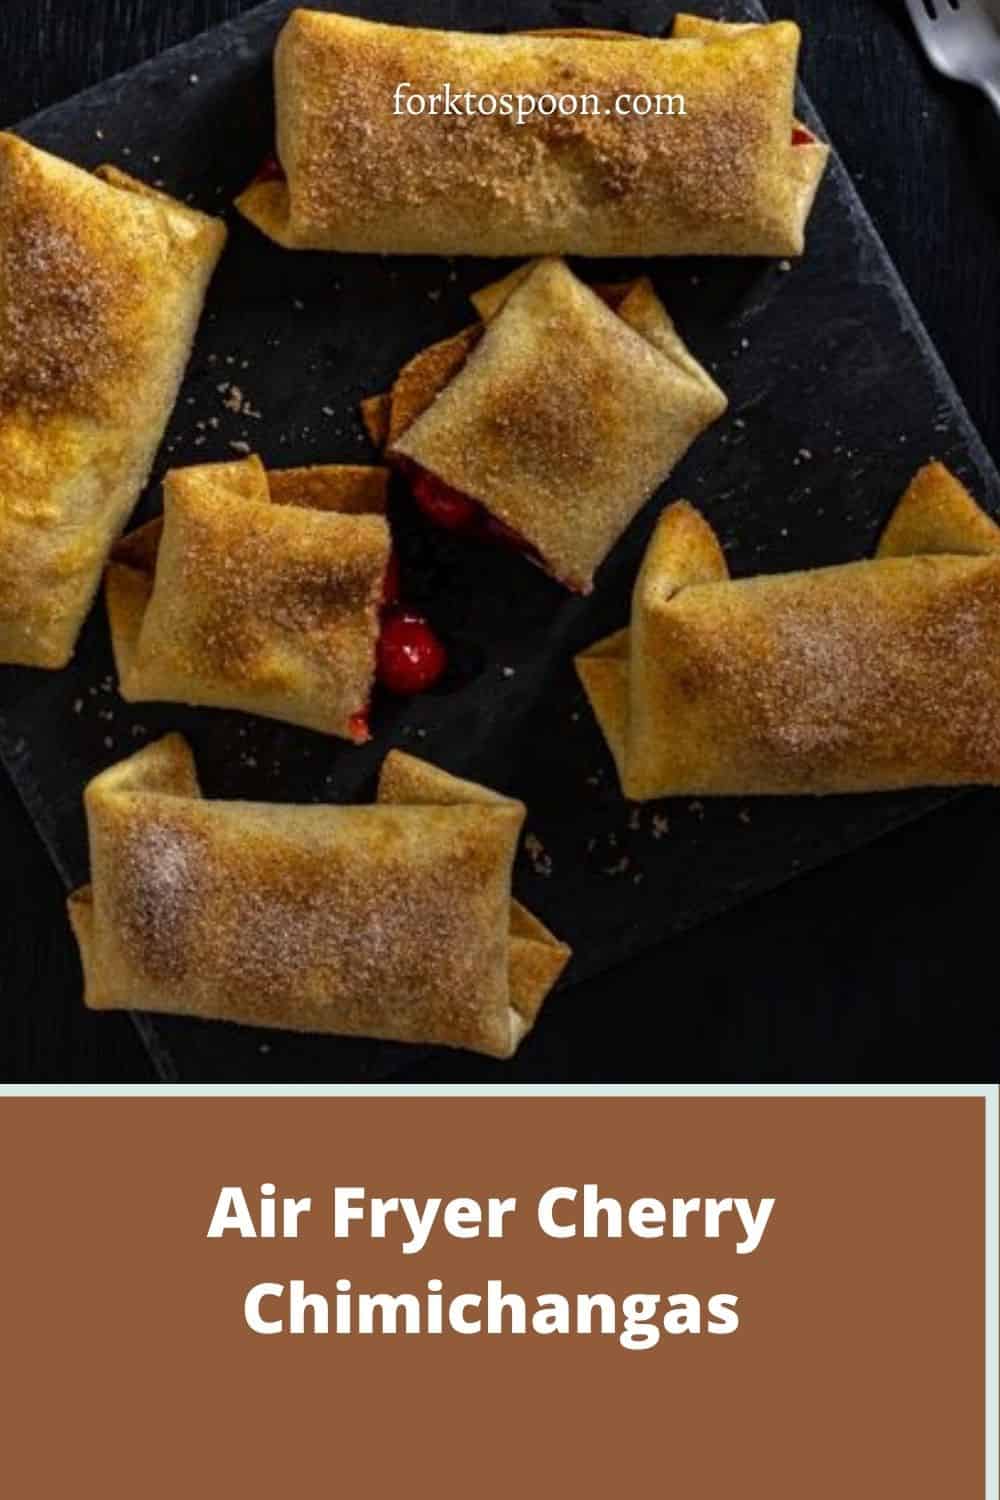 Air Fryer Chimichangas Recipe